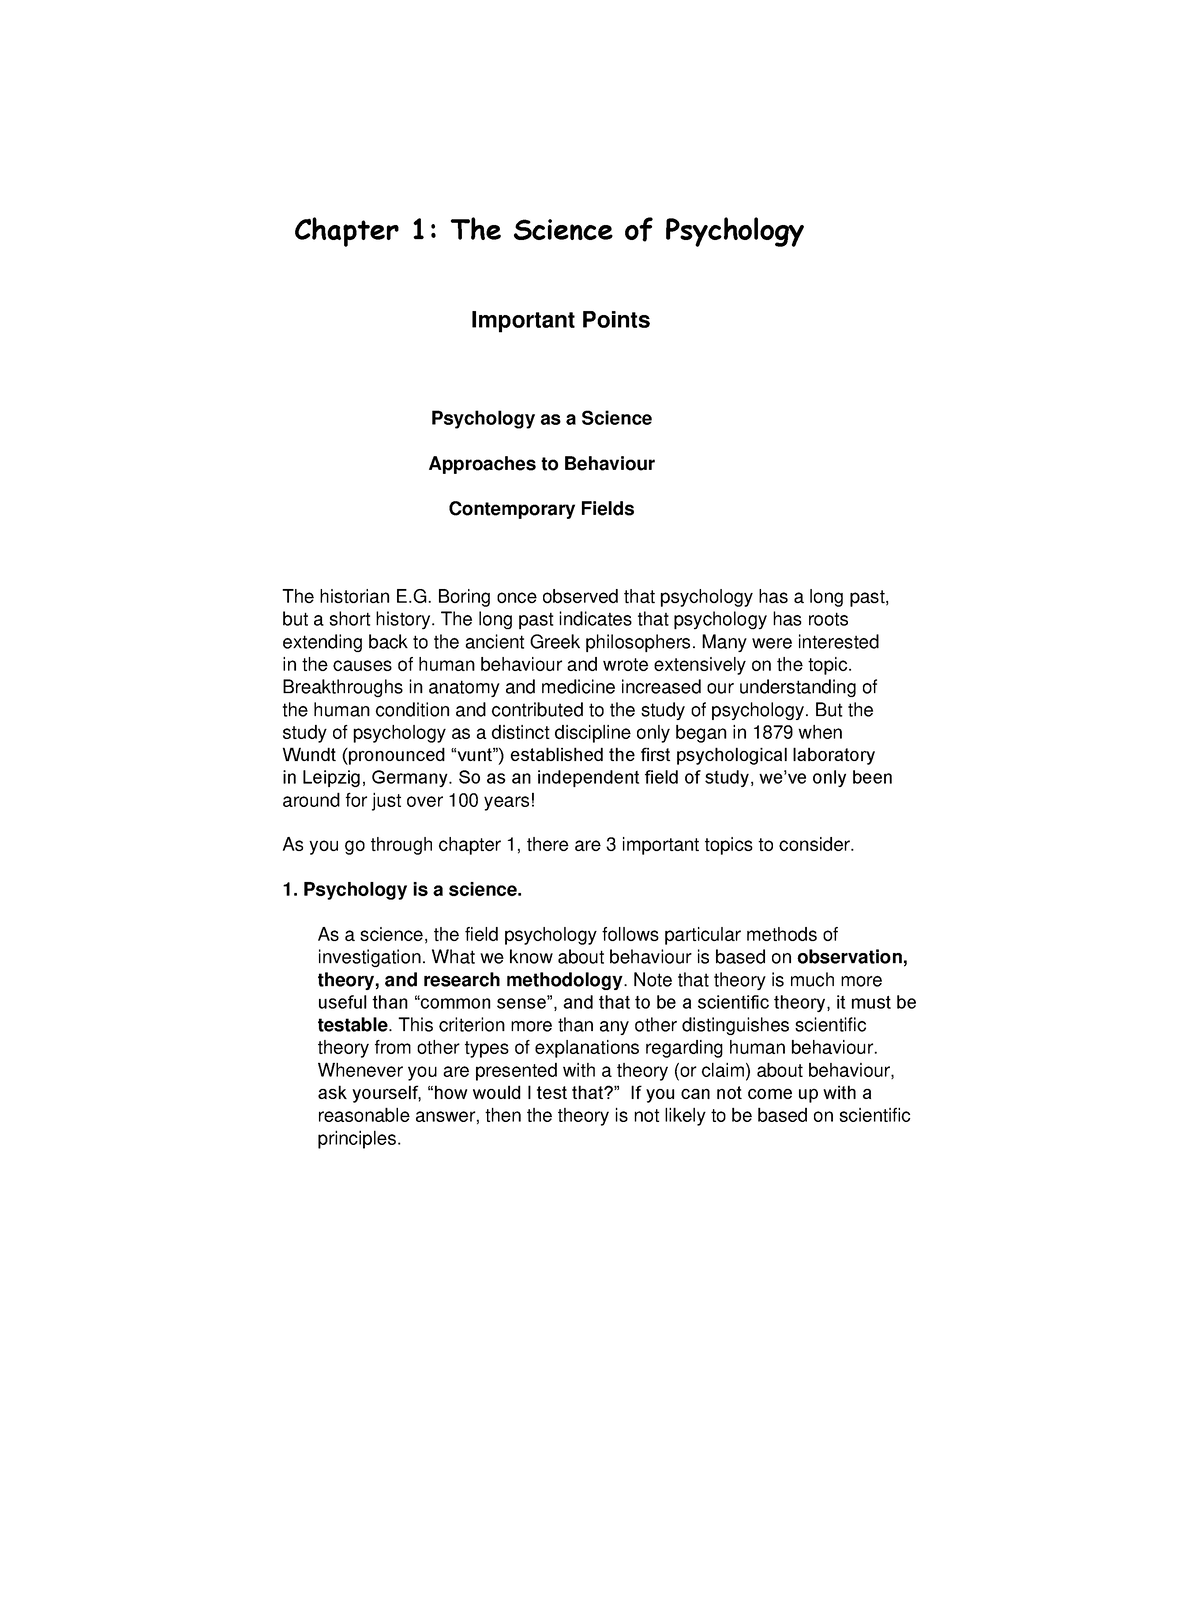 psychology as a science uk essay